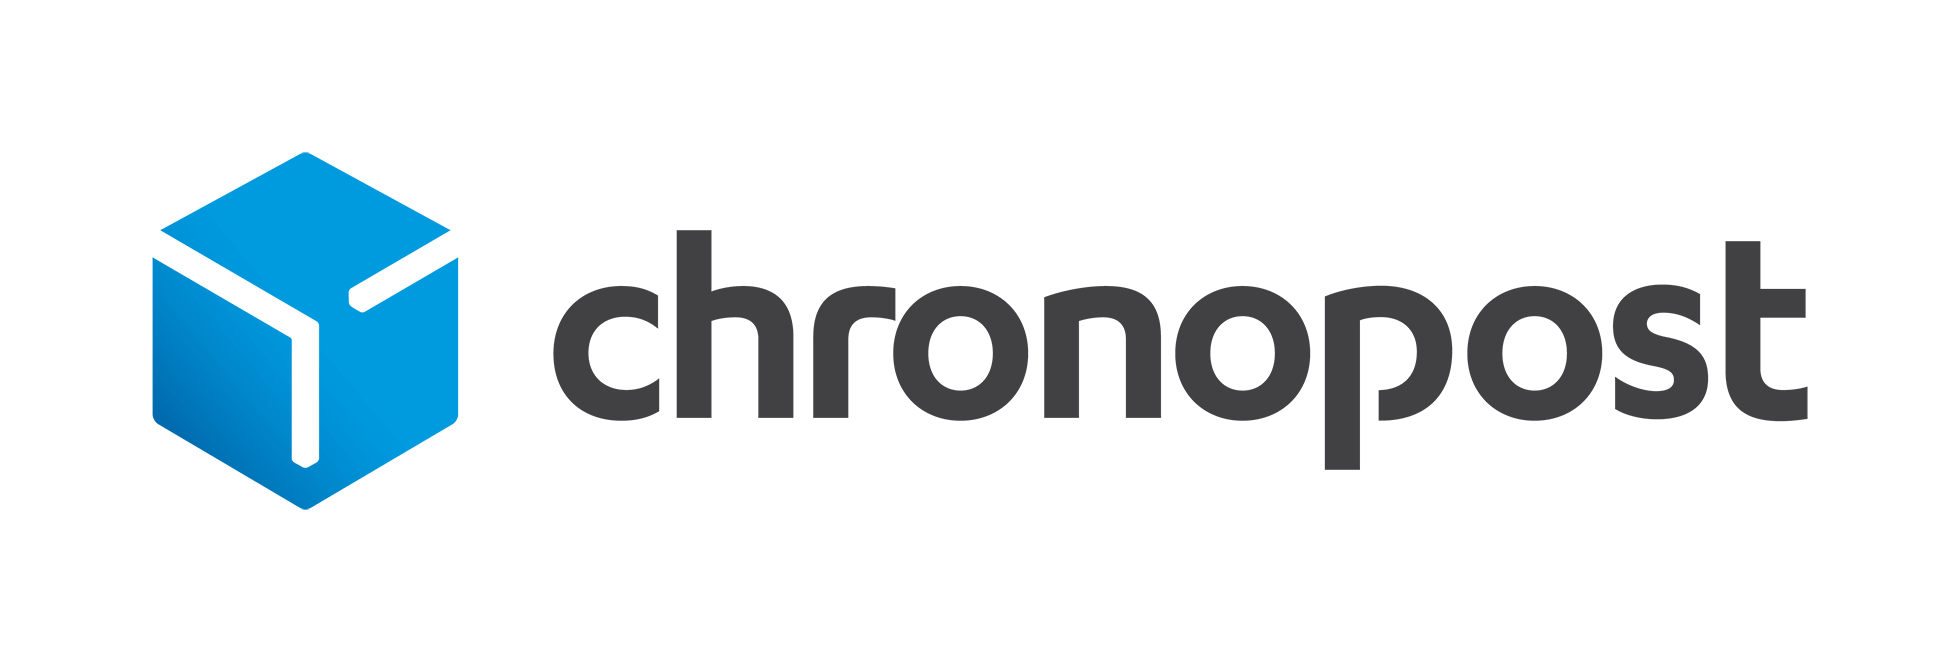 20181201224334!Chronopost_logo_2015